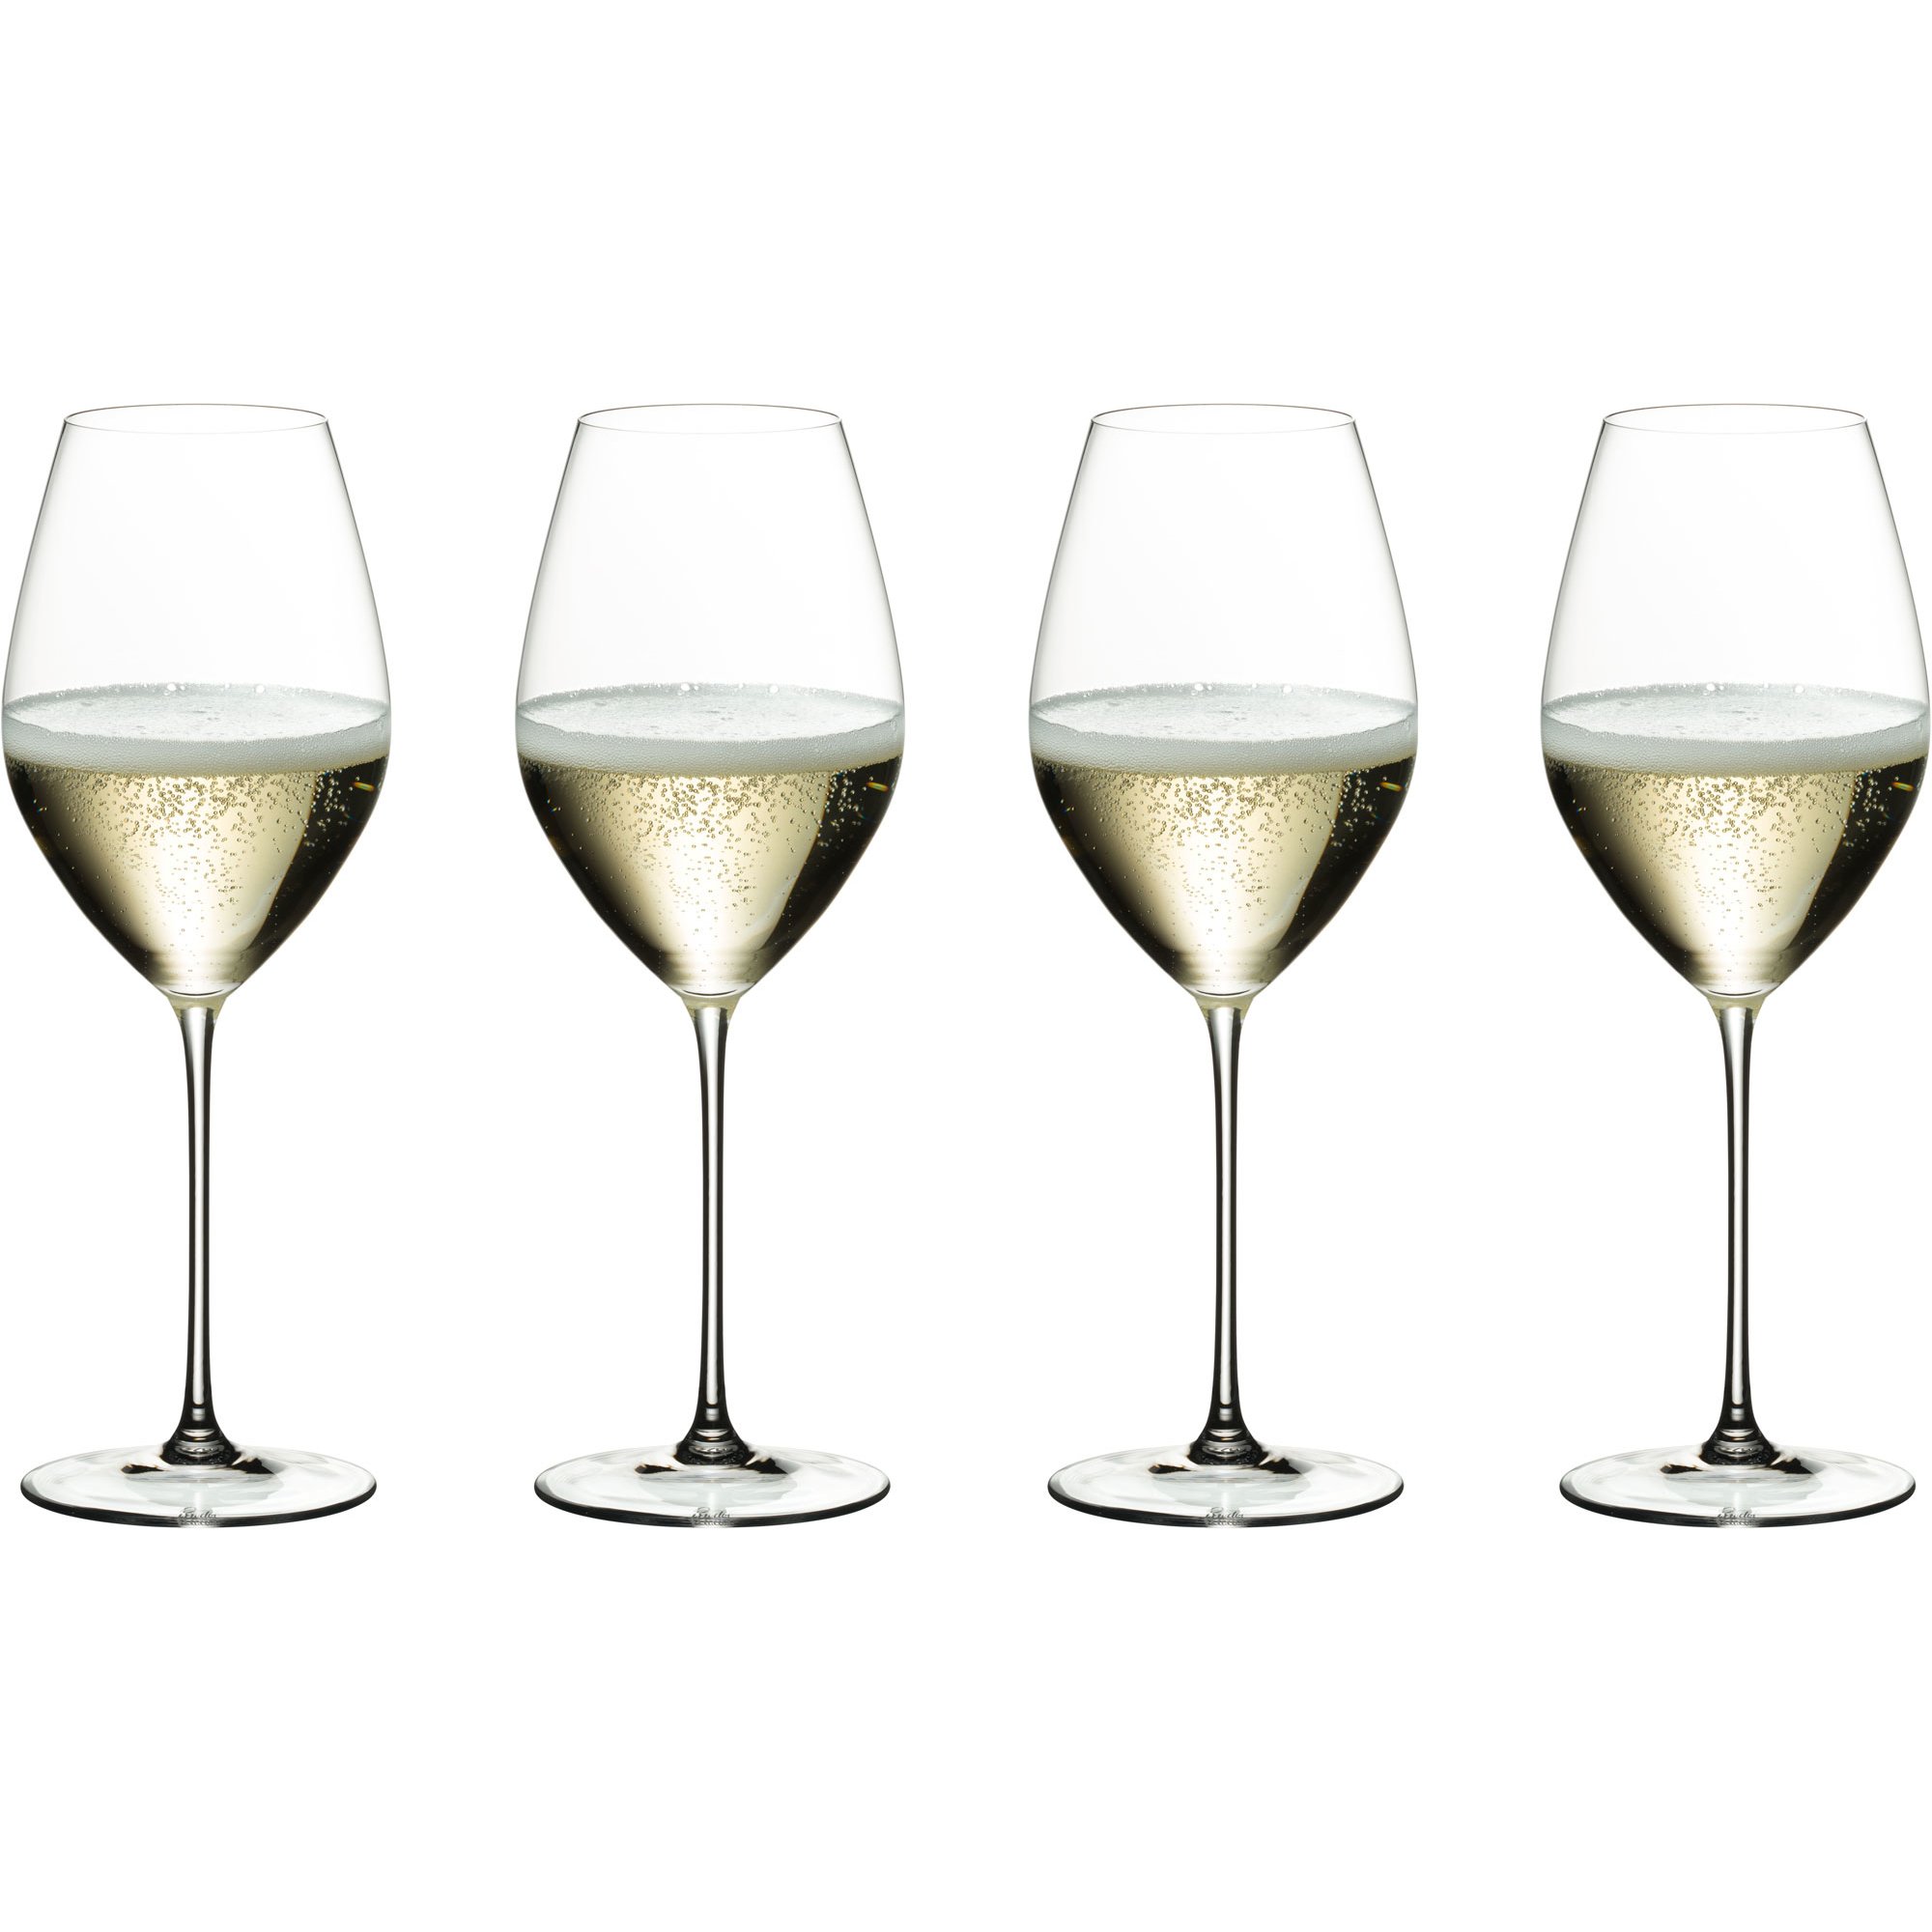 Riedel Veritas Champagneglas 4-pack, 265-årsjubileum